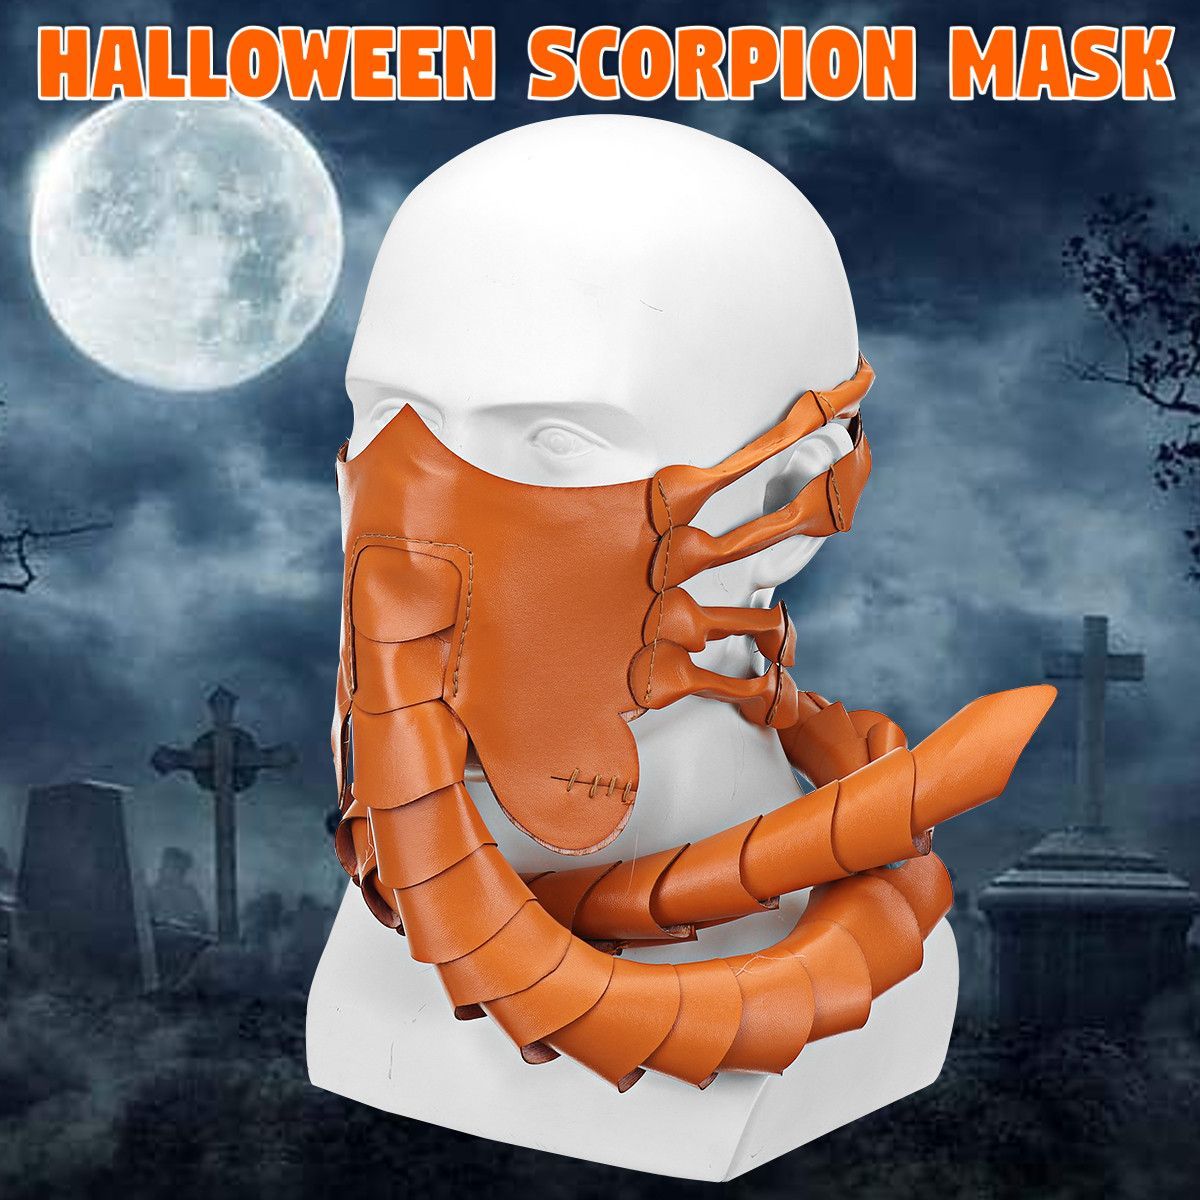 Alien-Facehugger-Toy-Halloween-Scorpion-Mask-Mortal-Kombat-Party-Props-Cosplay-1751921